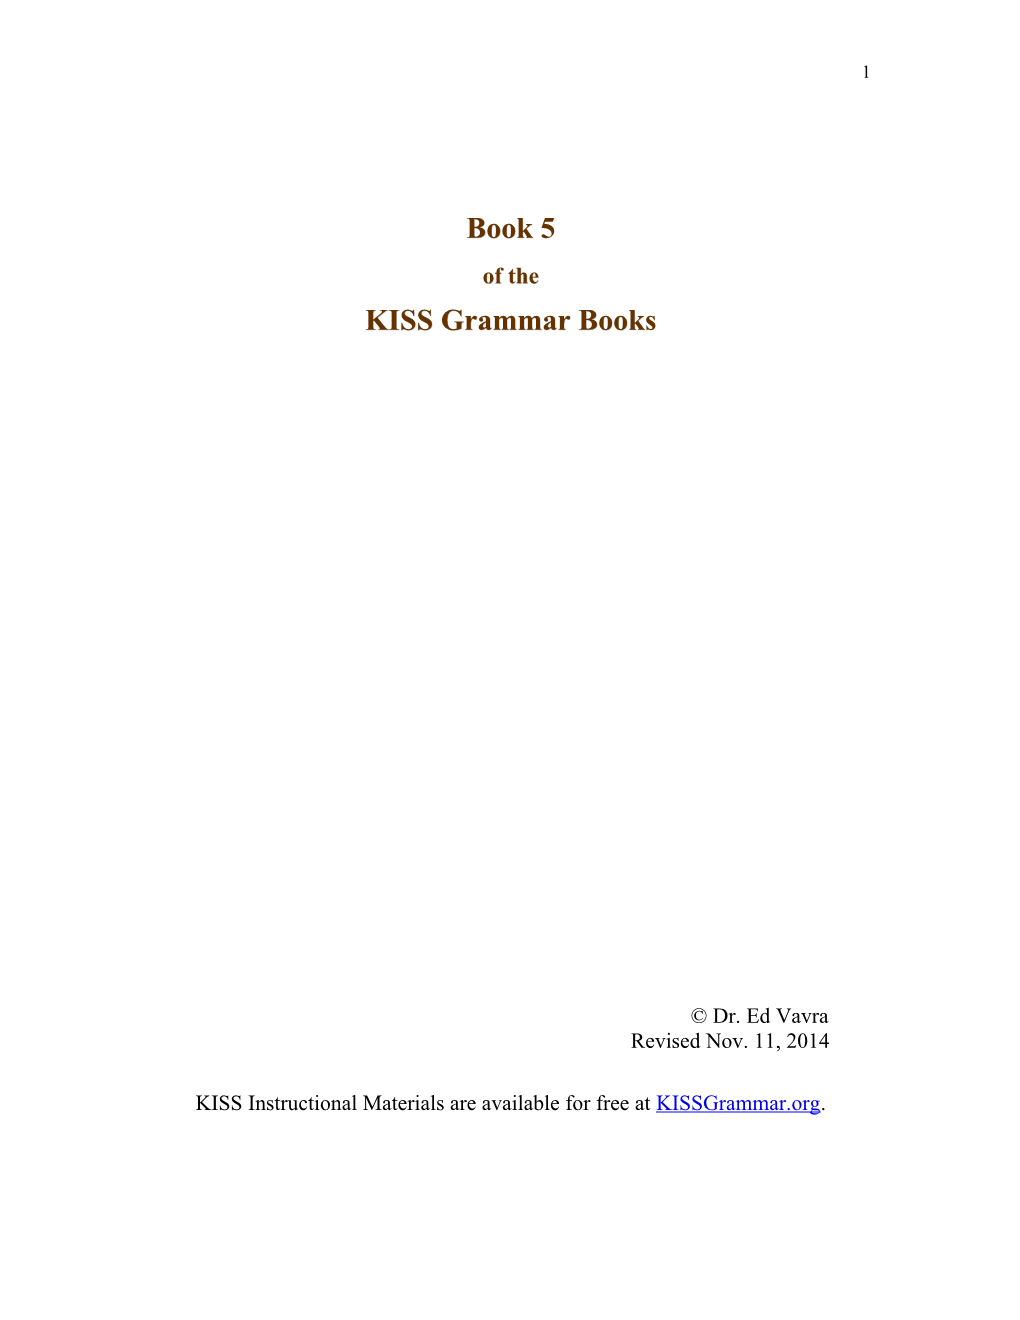 The KISS Grammar Book s1